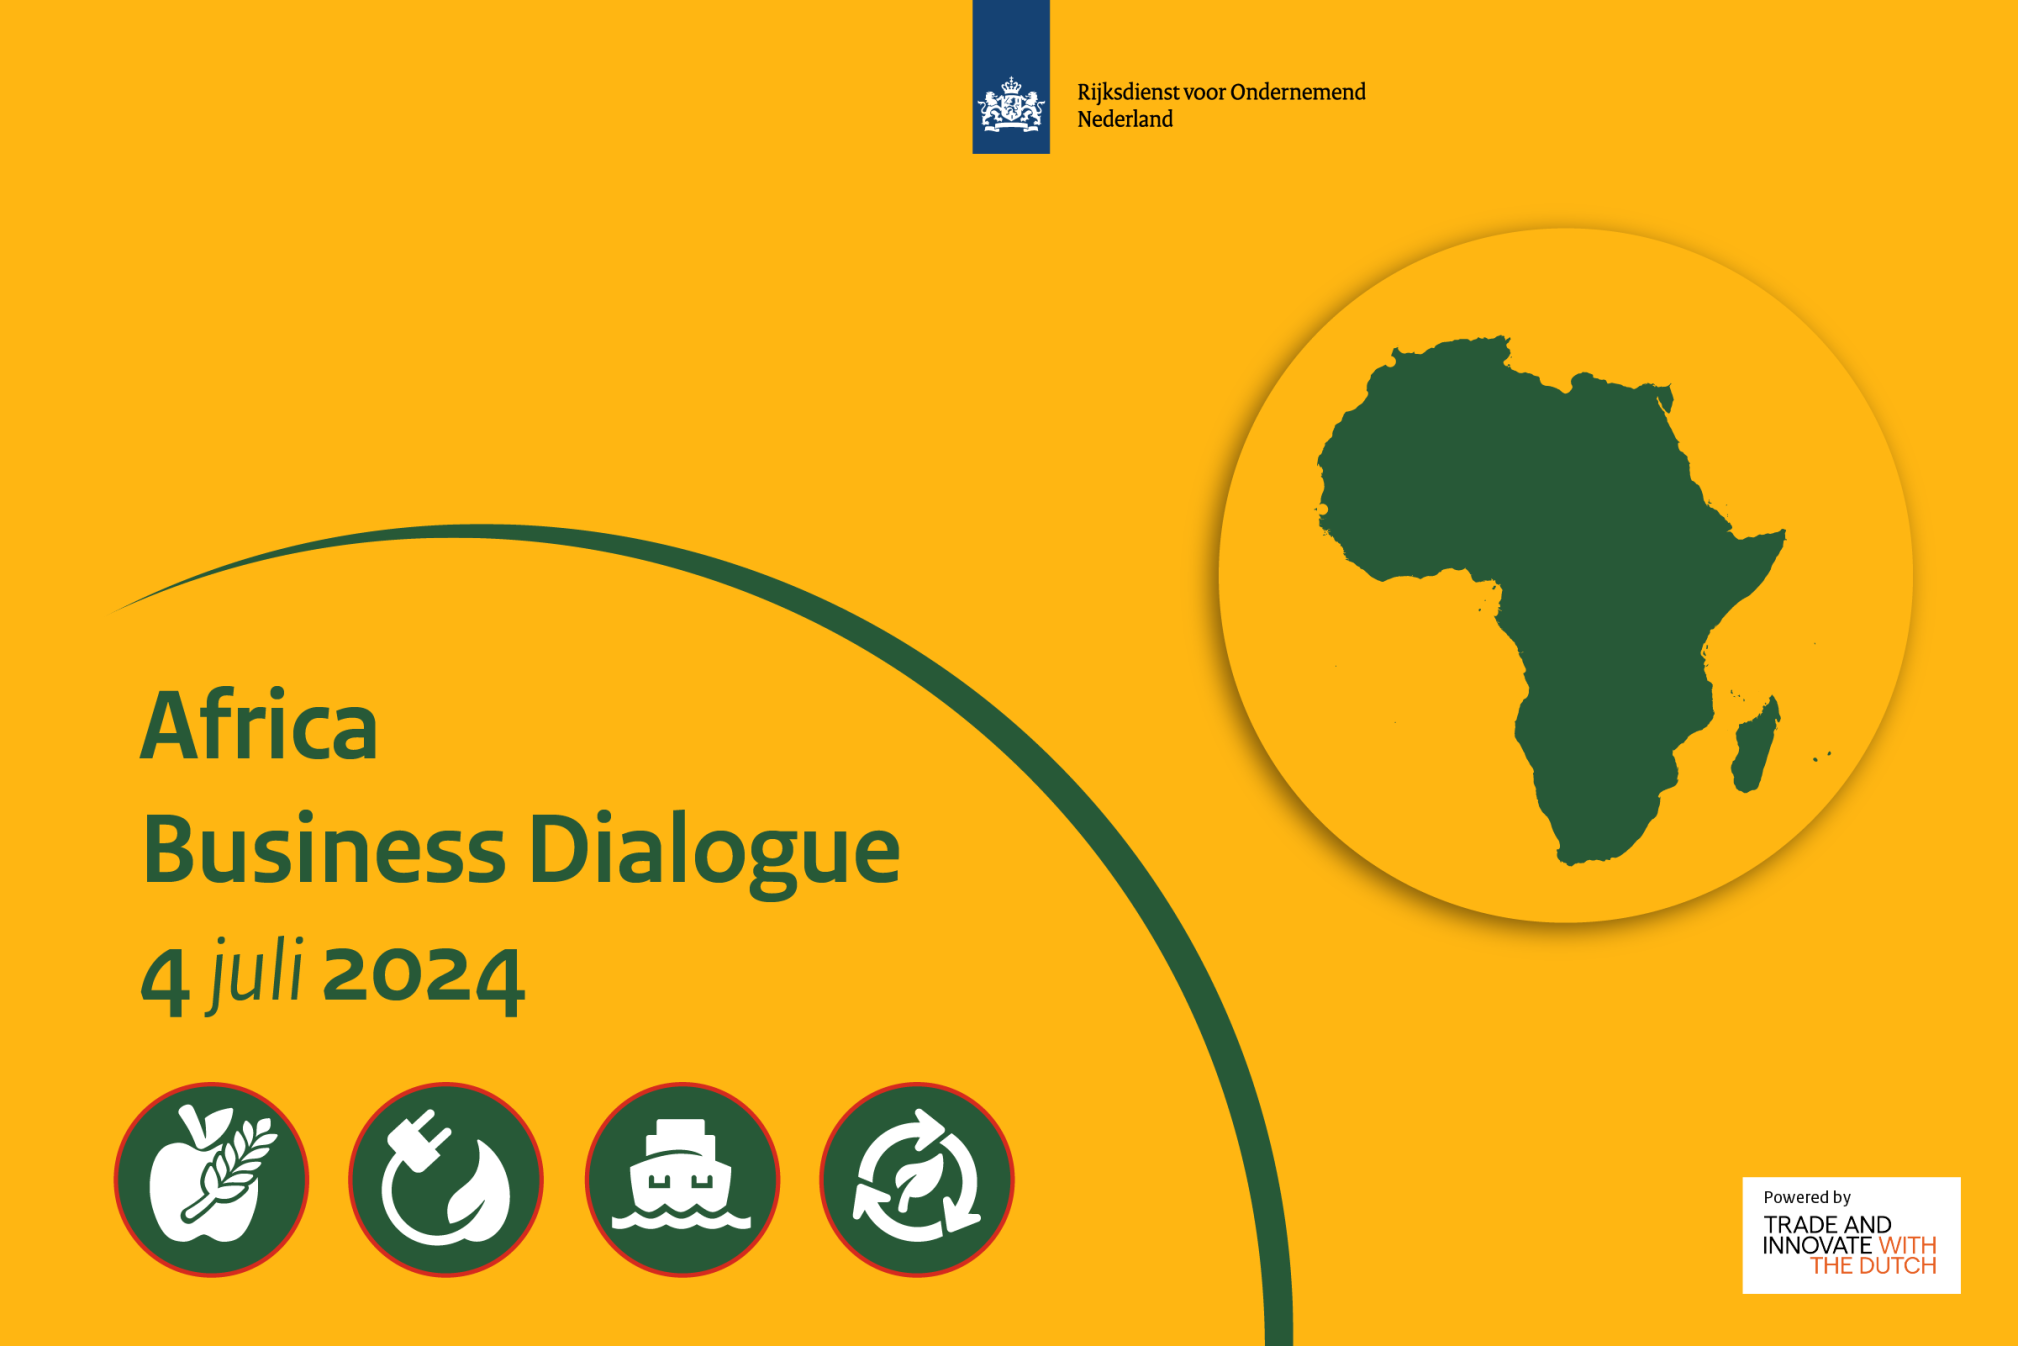 Africa Business Dialogue 2024